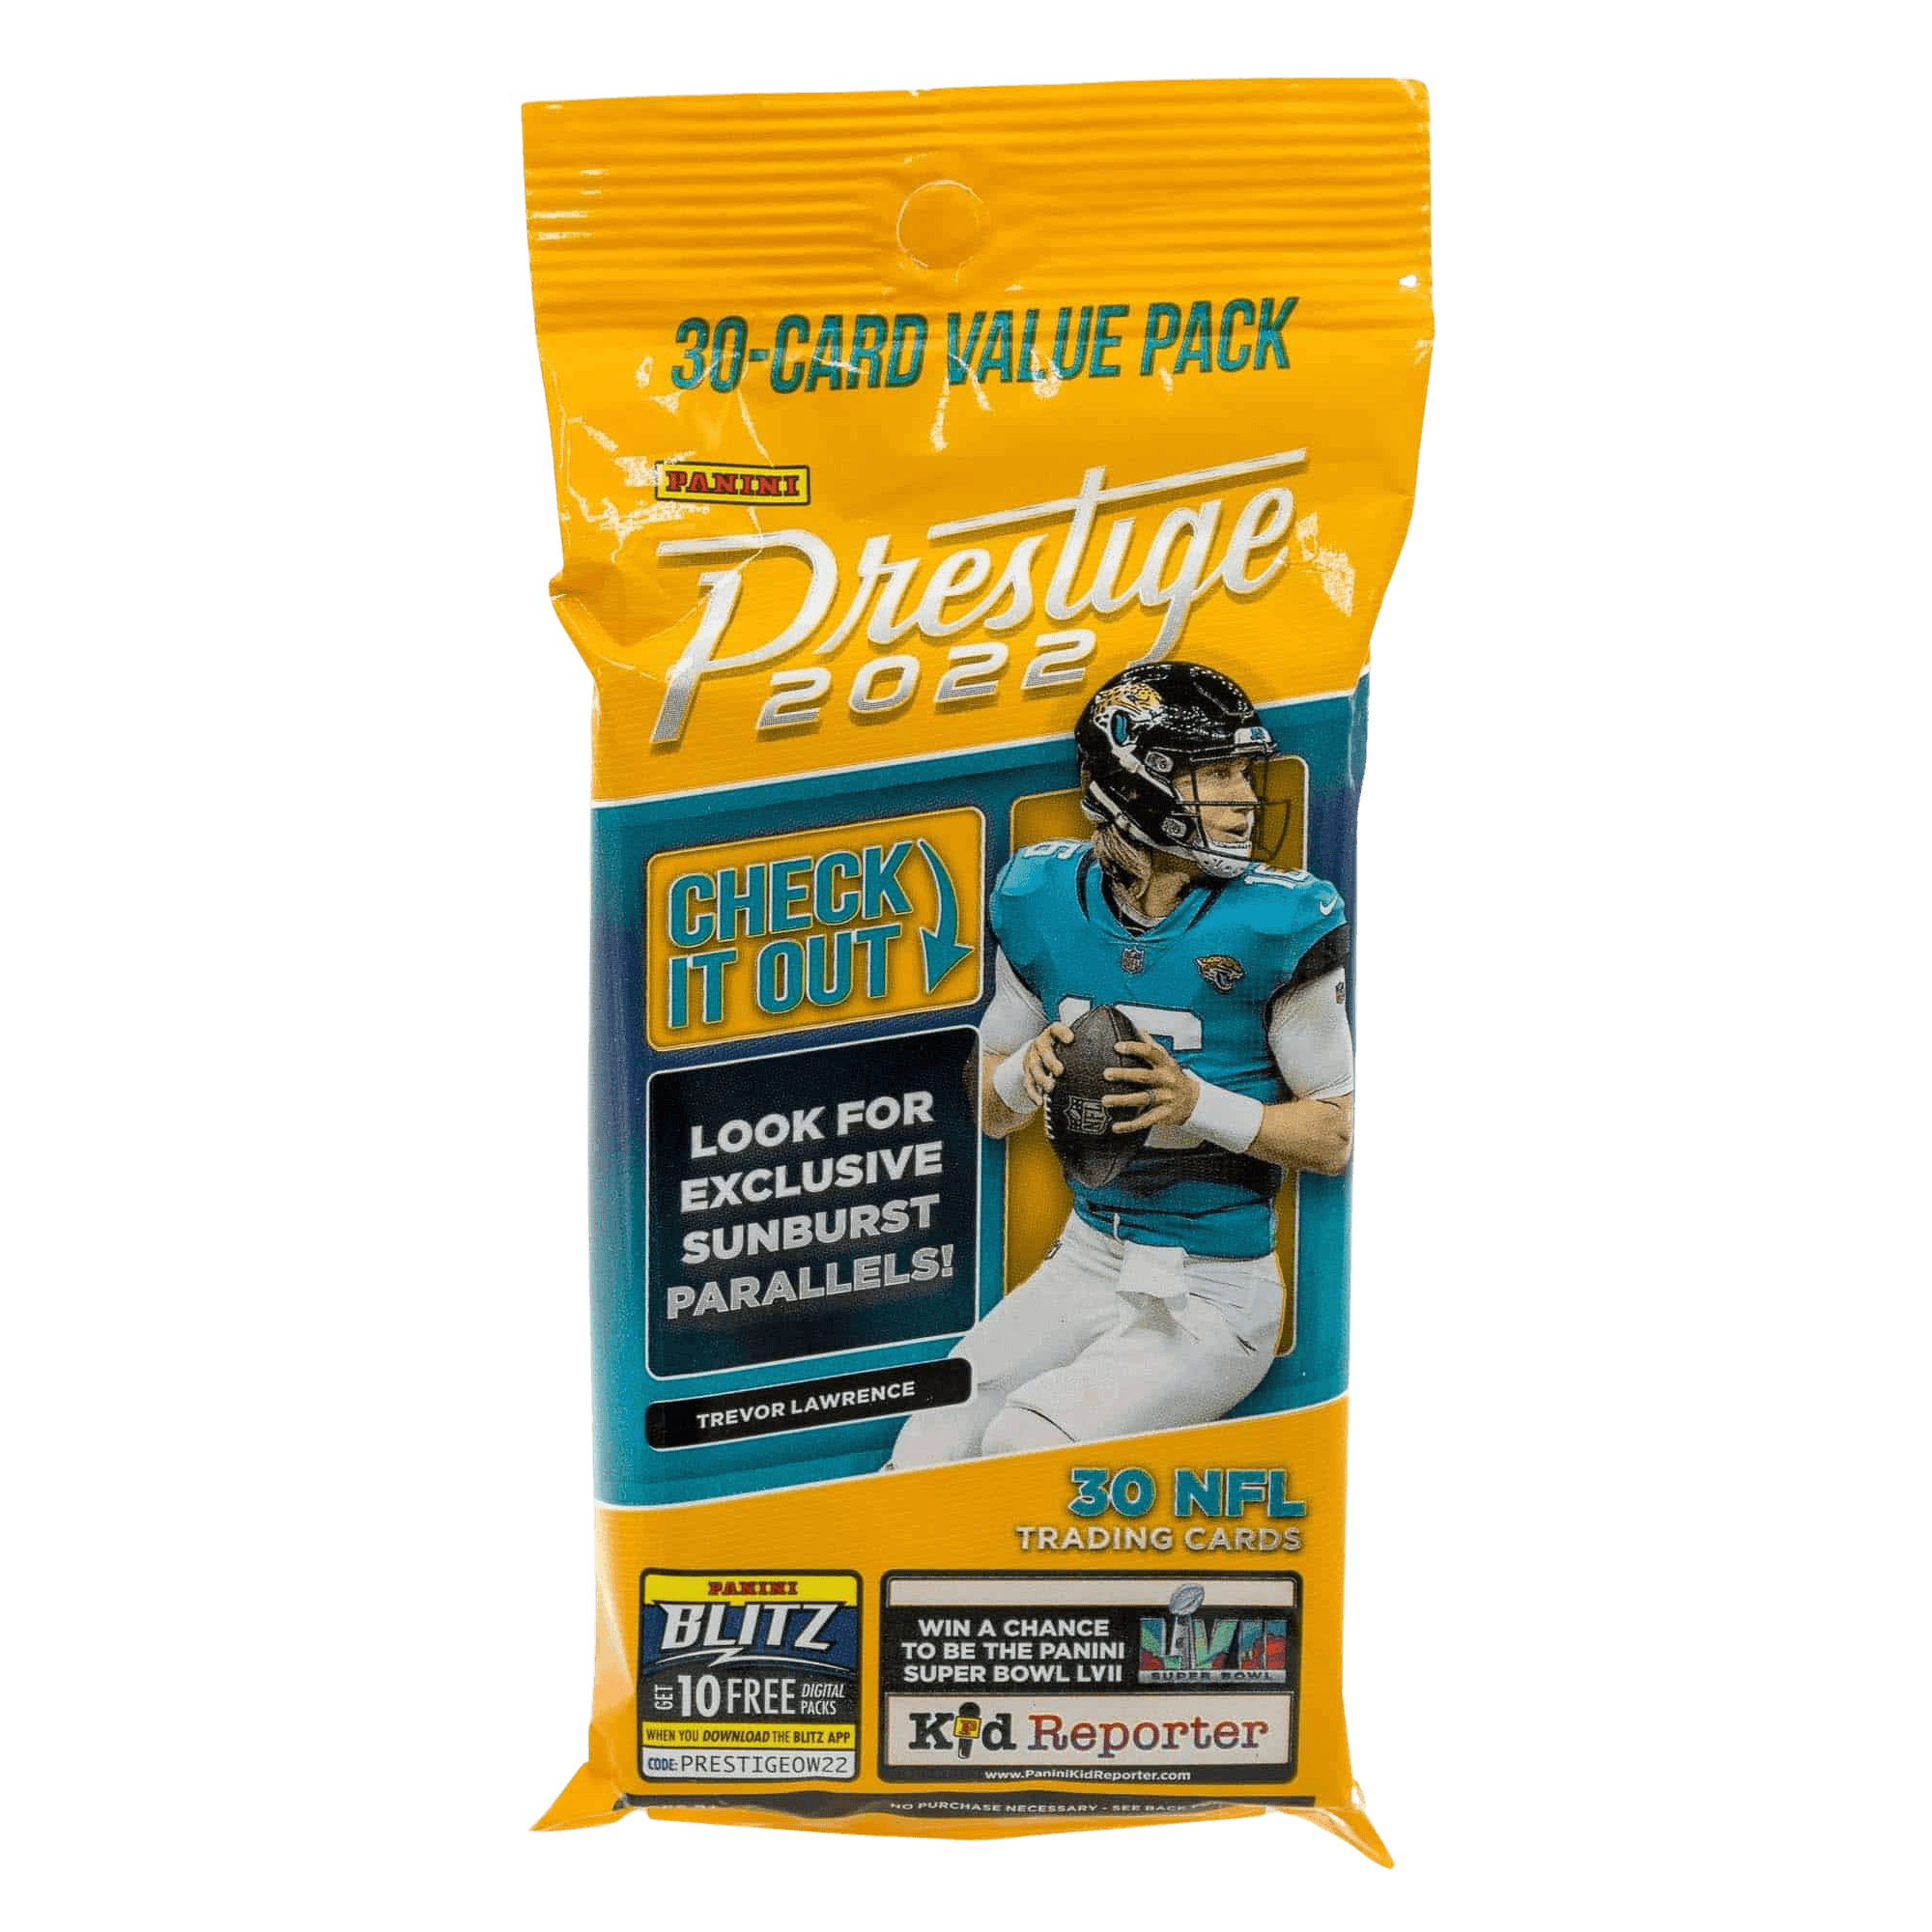 Panini - 2022 Prestige American Football (NFL) - Fat Pack Box - The Card Vault